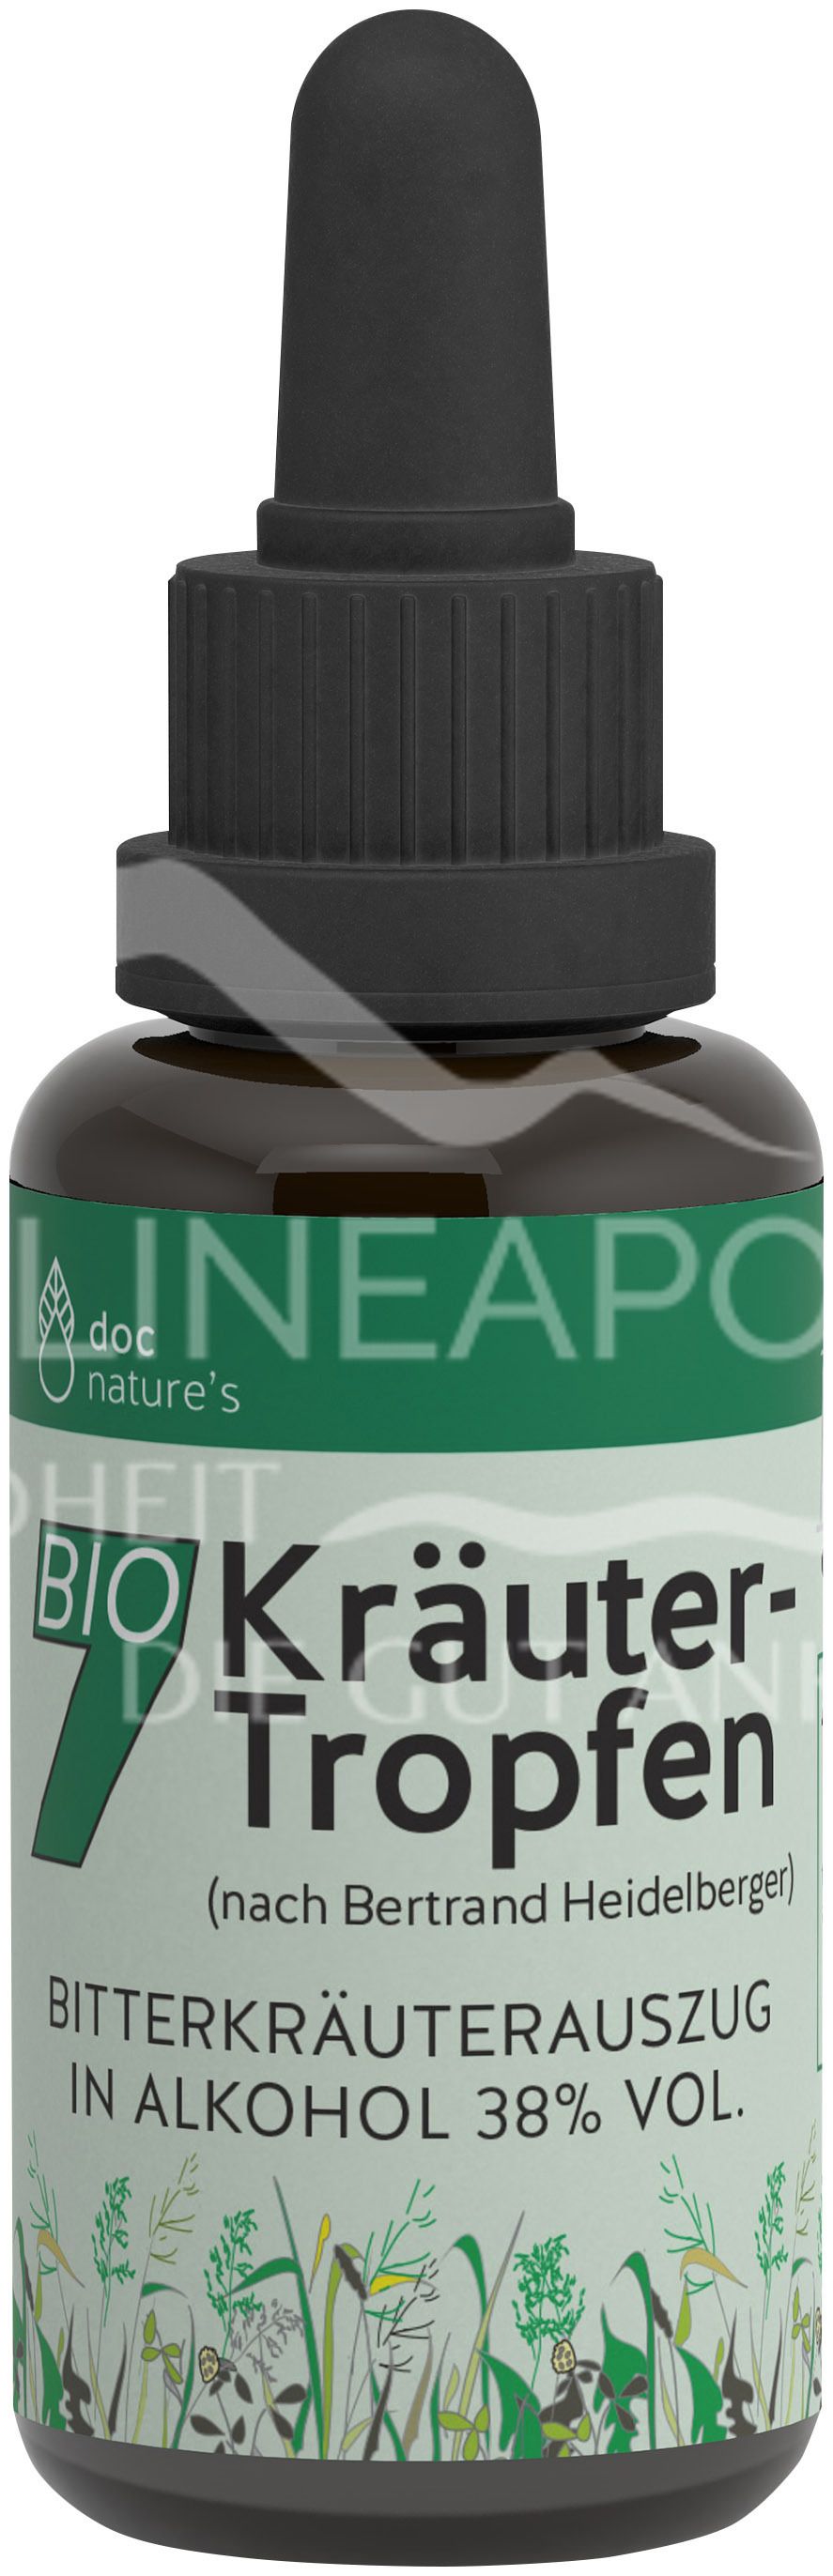 doc nature’s BIO 7 Kräuter-Tropfen